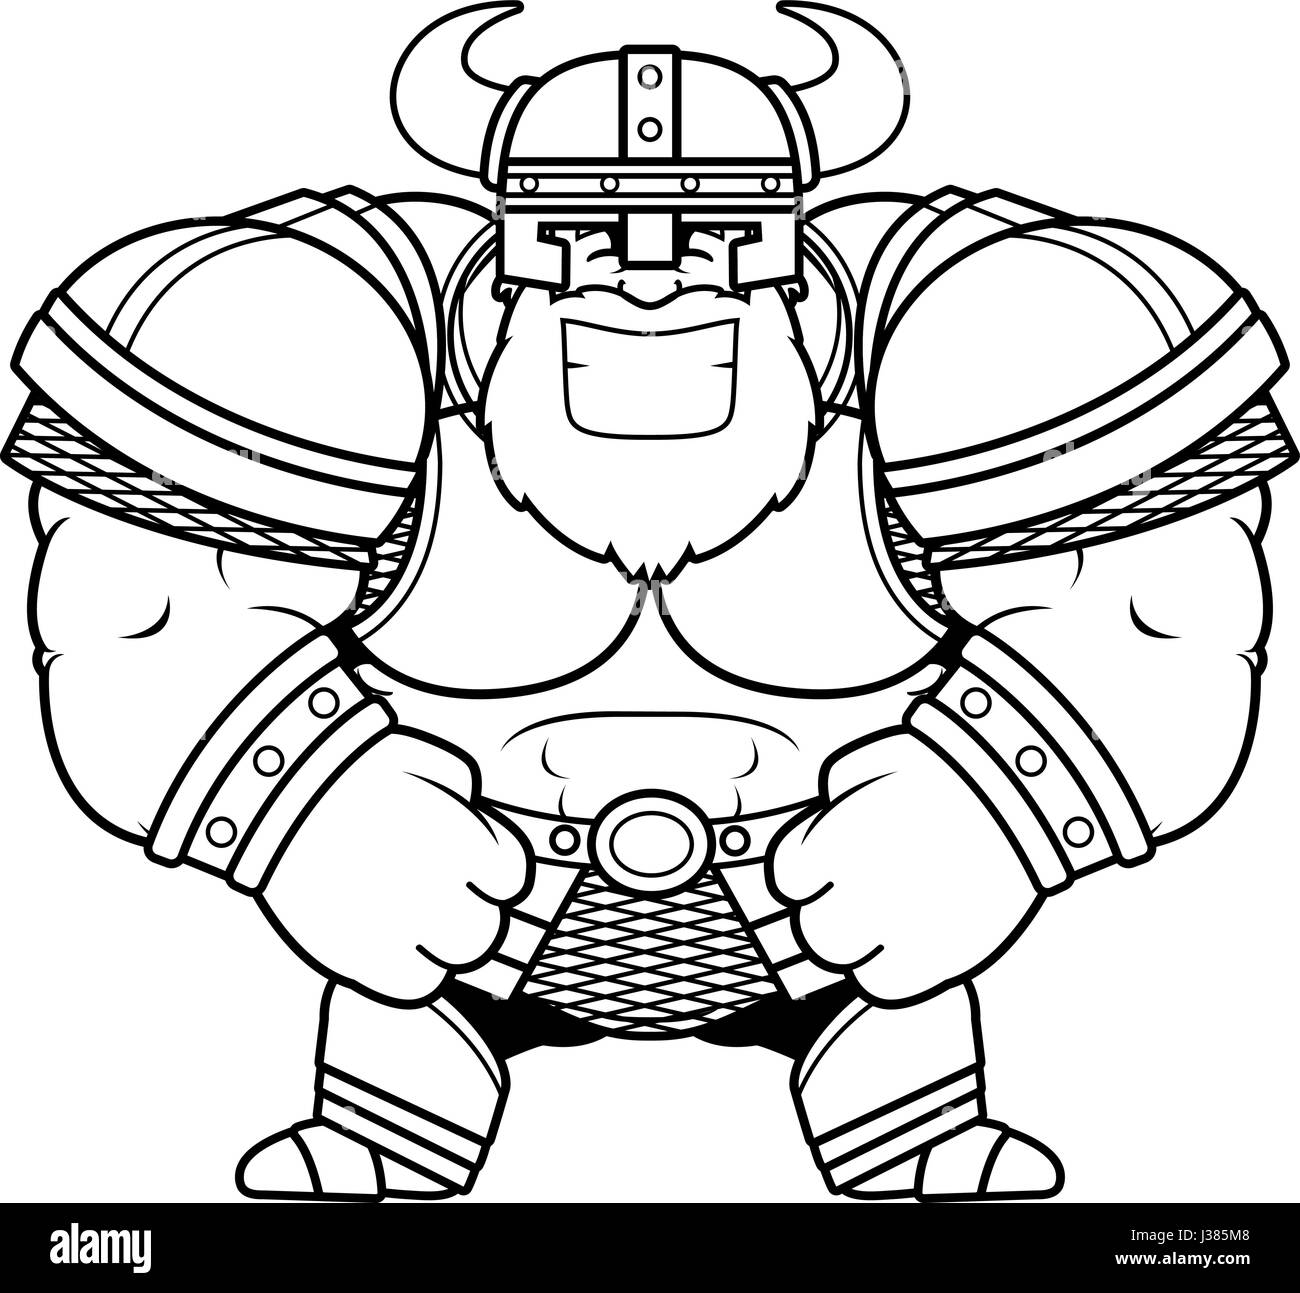 A cartoon illustration of a muscular Viking smiling. Stock Vector